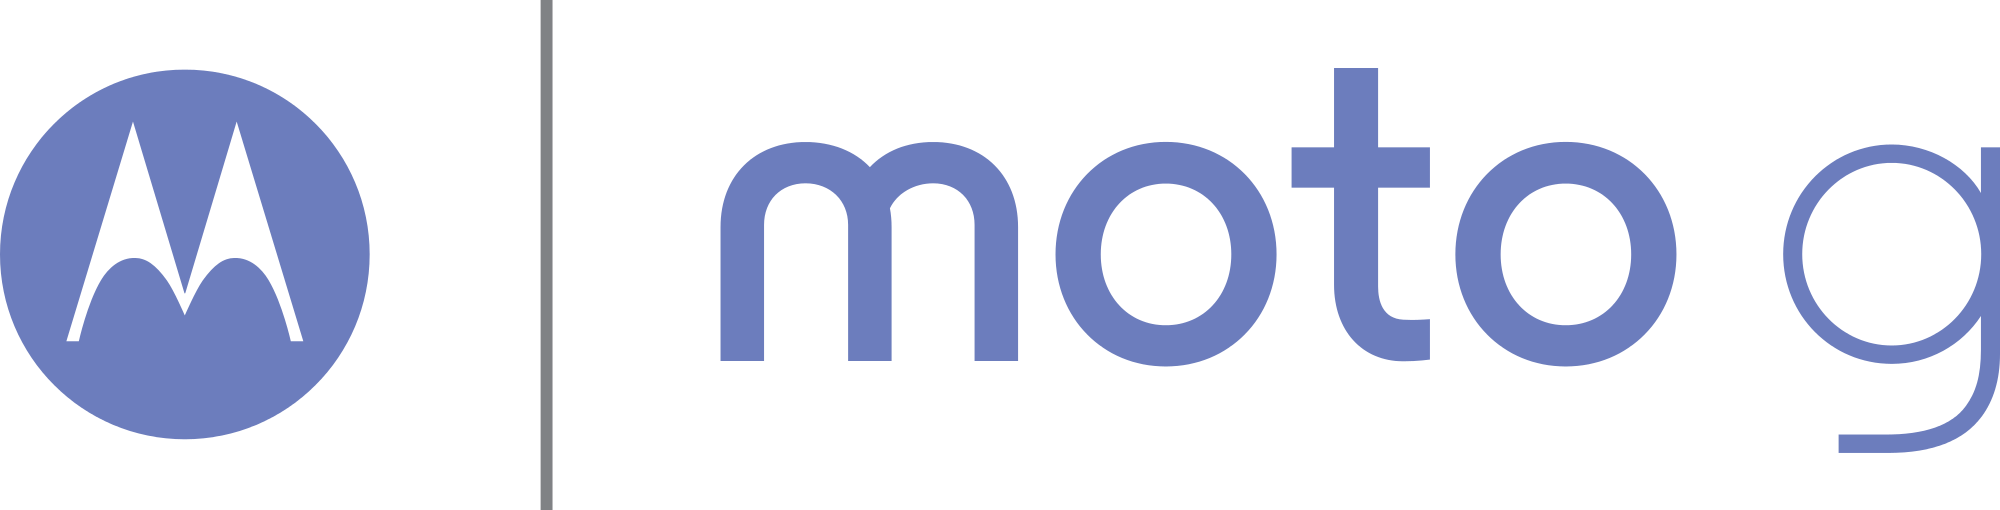 Moto Logo - File:Moto G logo.svg - Wikimedia Commons